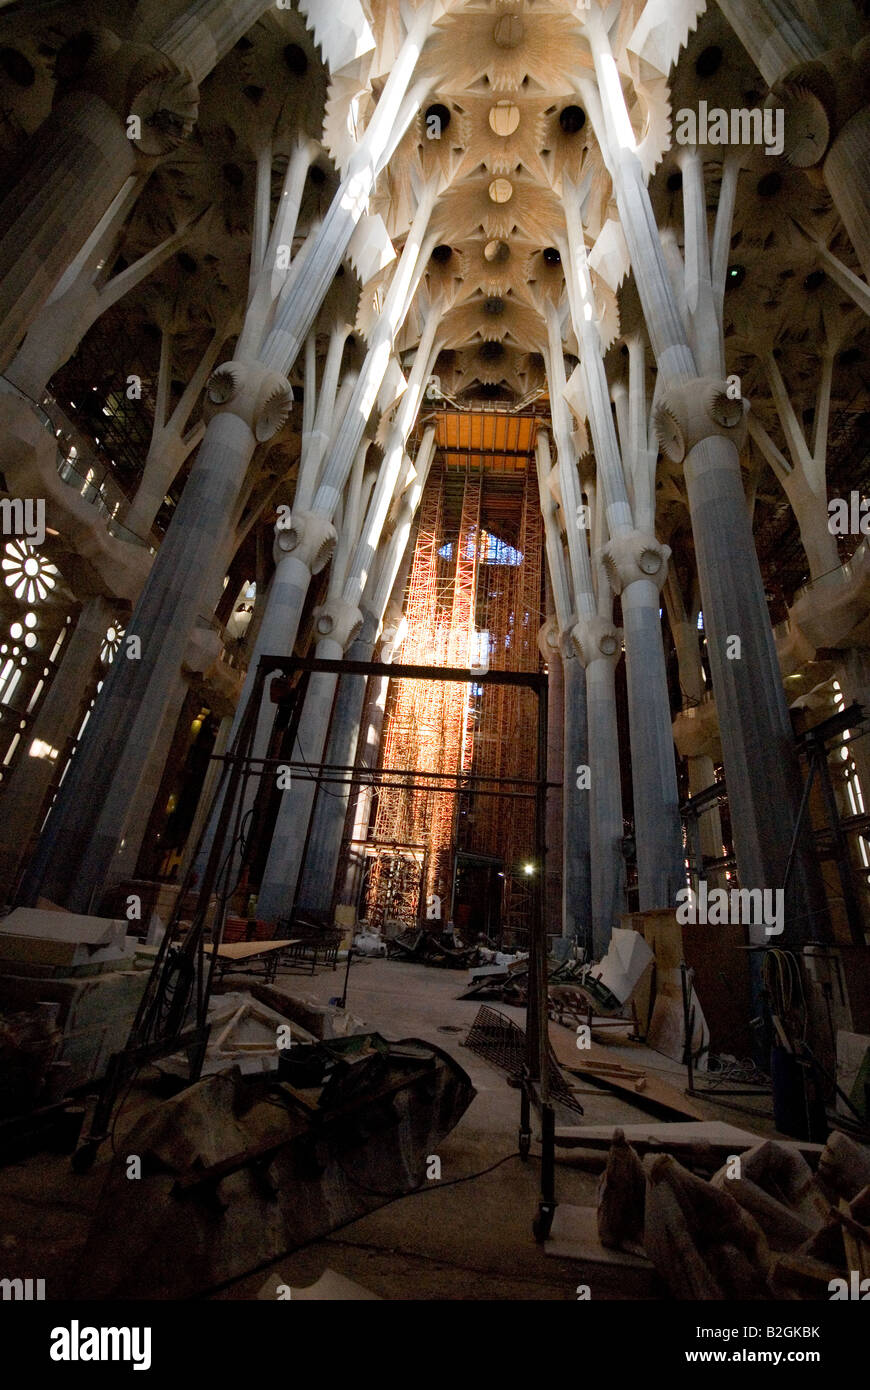 La Sagrada Familia Gaudi church architecture Barcelona Spain Europe Stock Photo